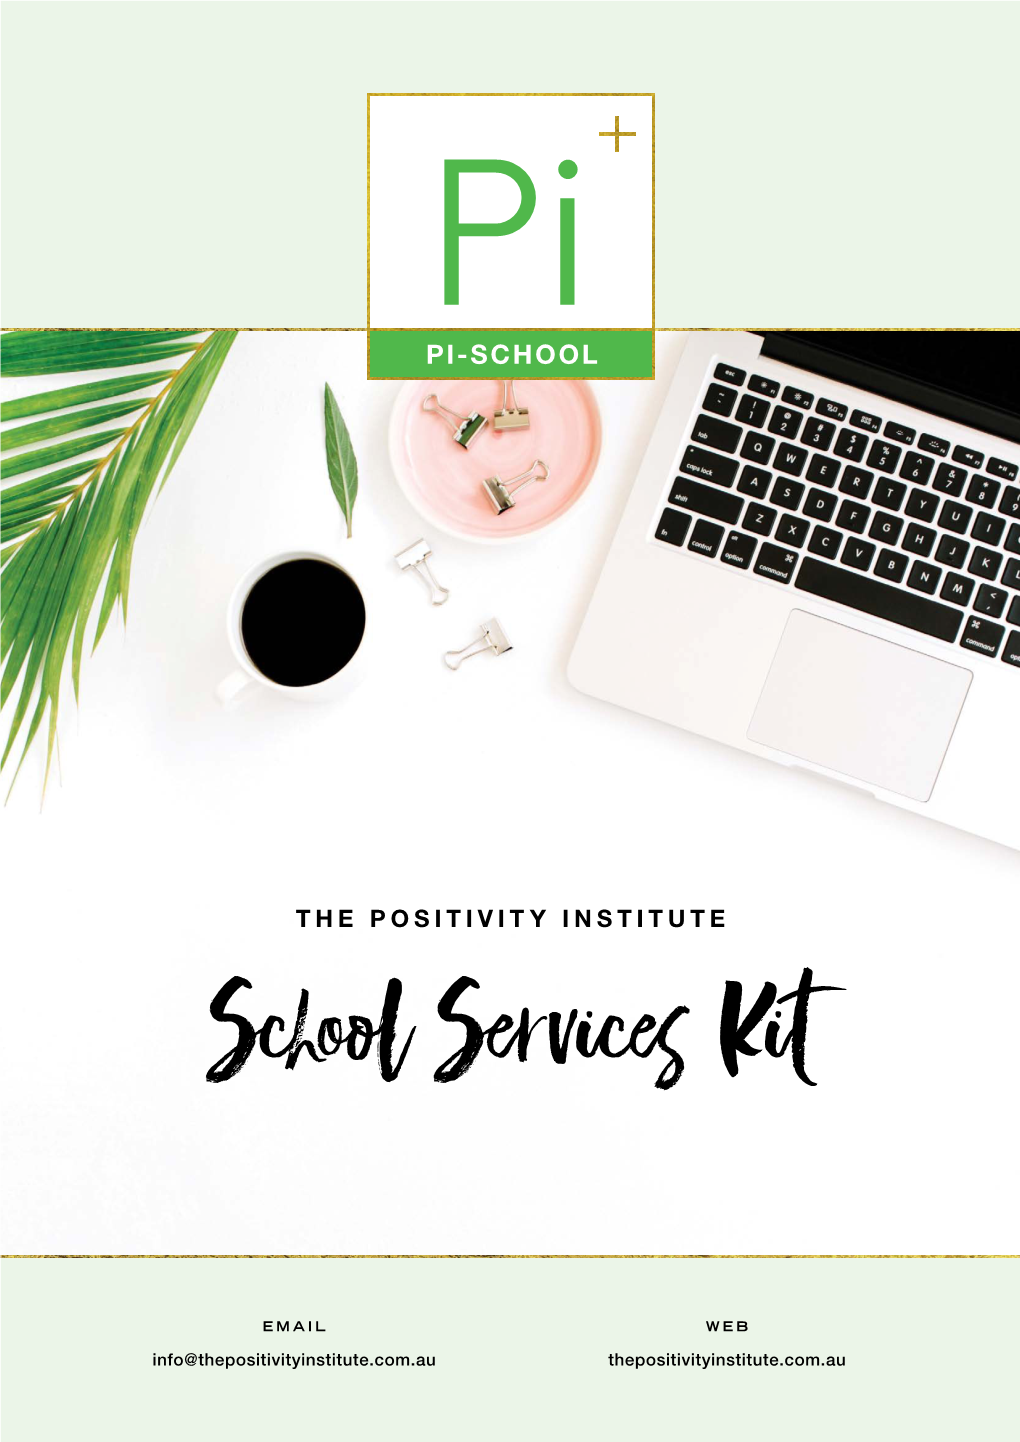 THE POSITIVITY INSTITUTE School Services Kit